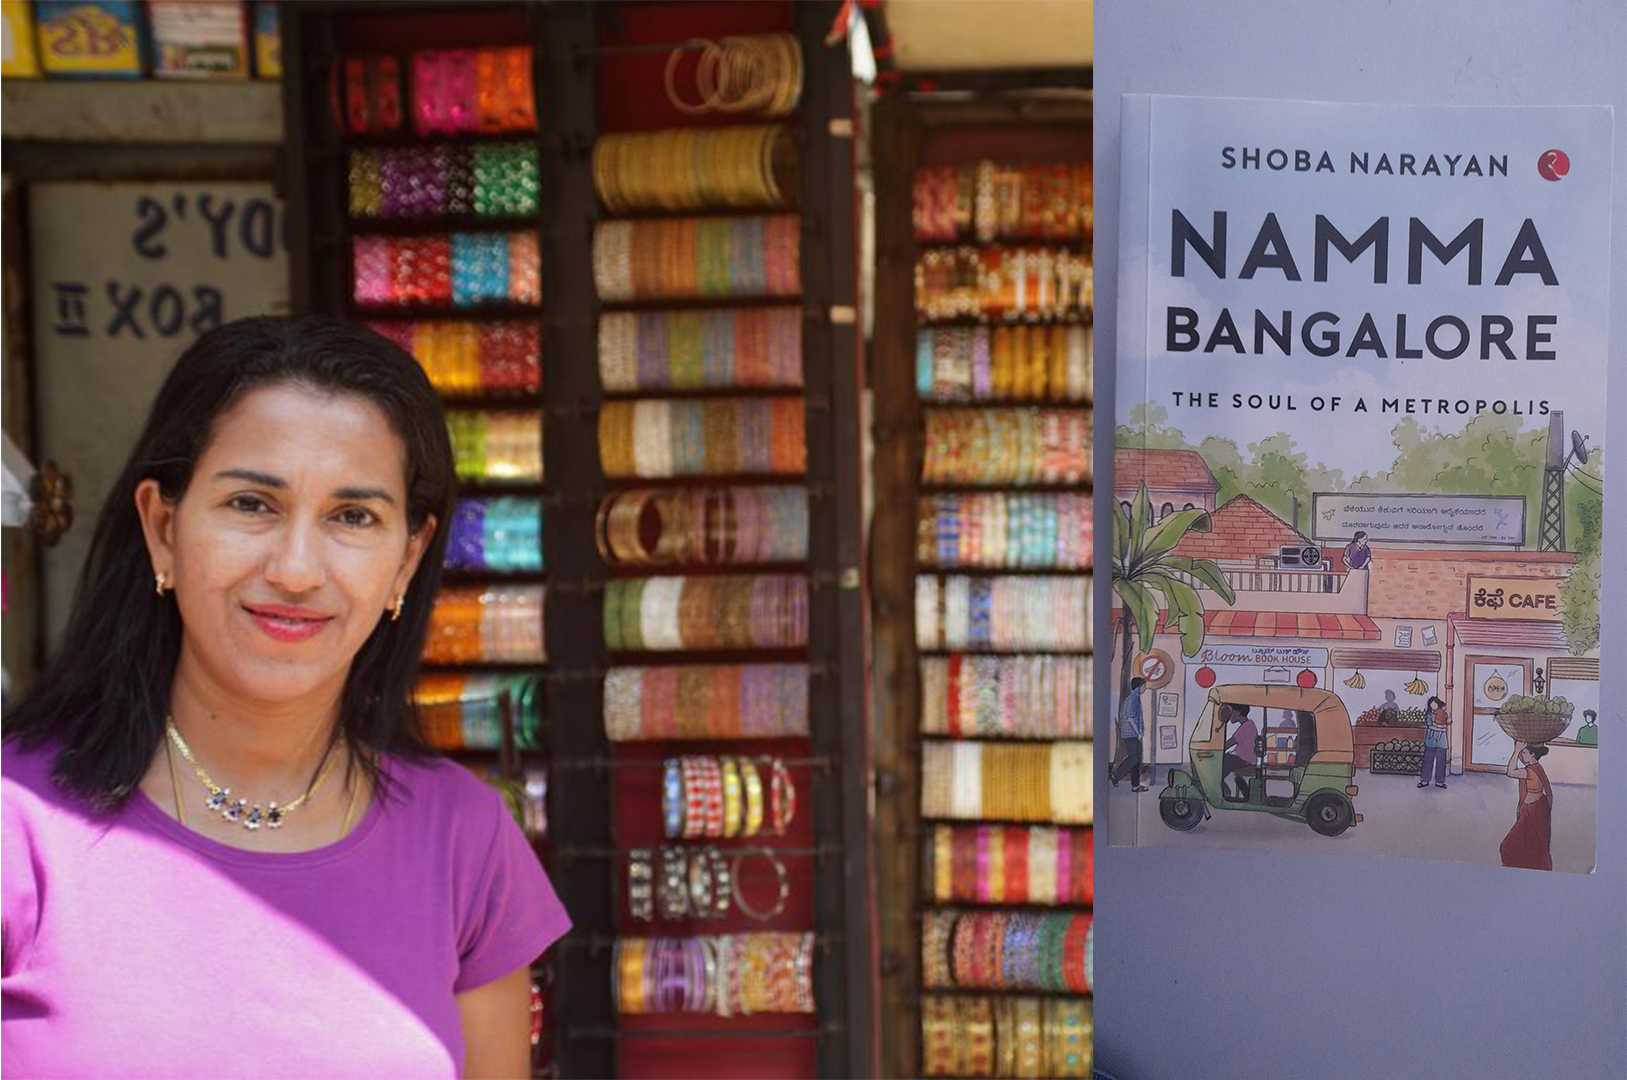 Shoba Narayan’s book ‘Namma Bangalore’ is a handy guidebook if you have just moved into Bengaluru